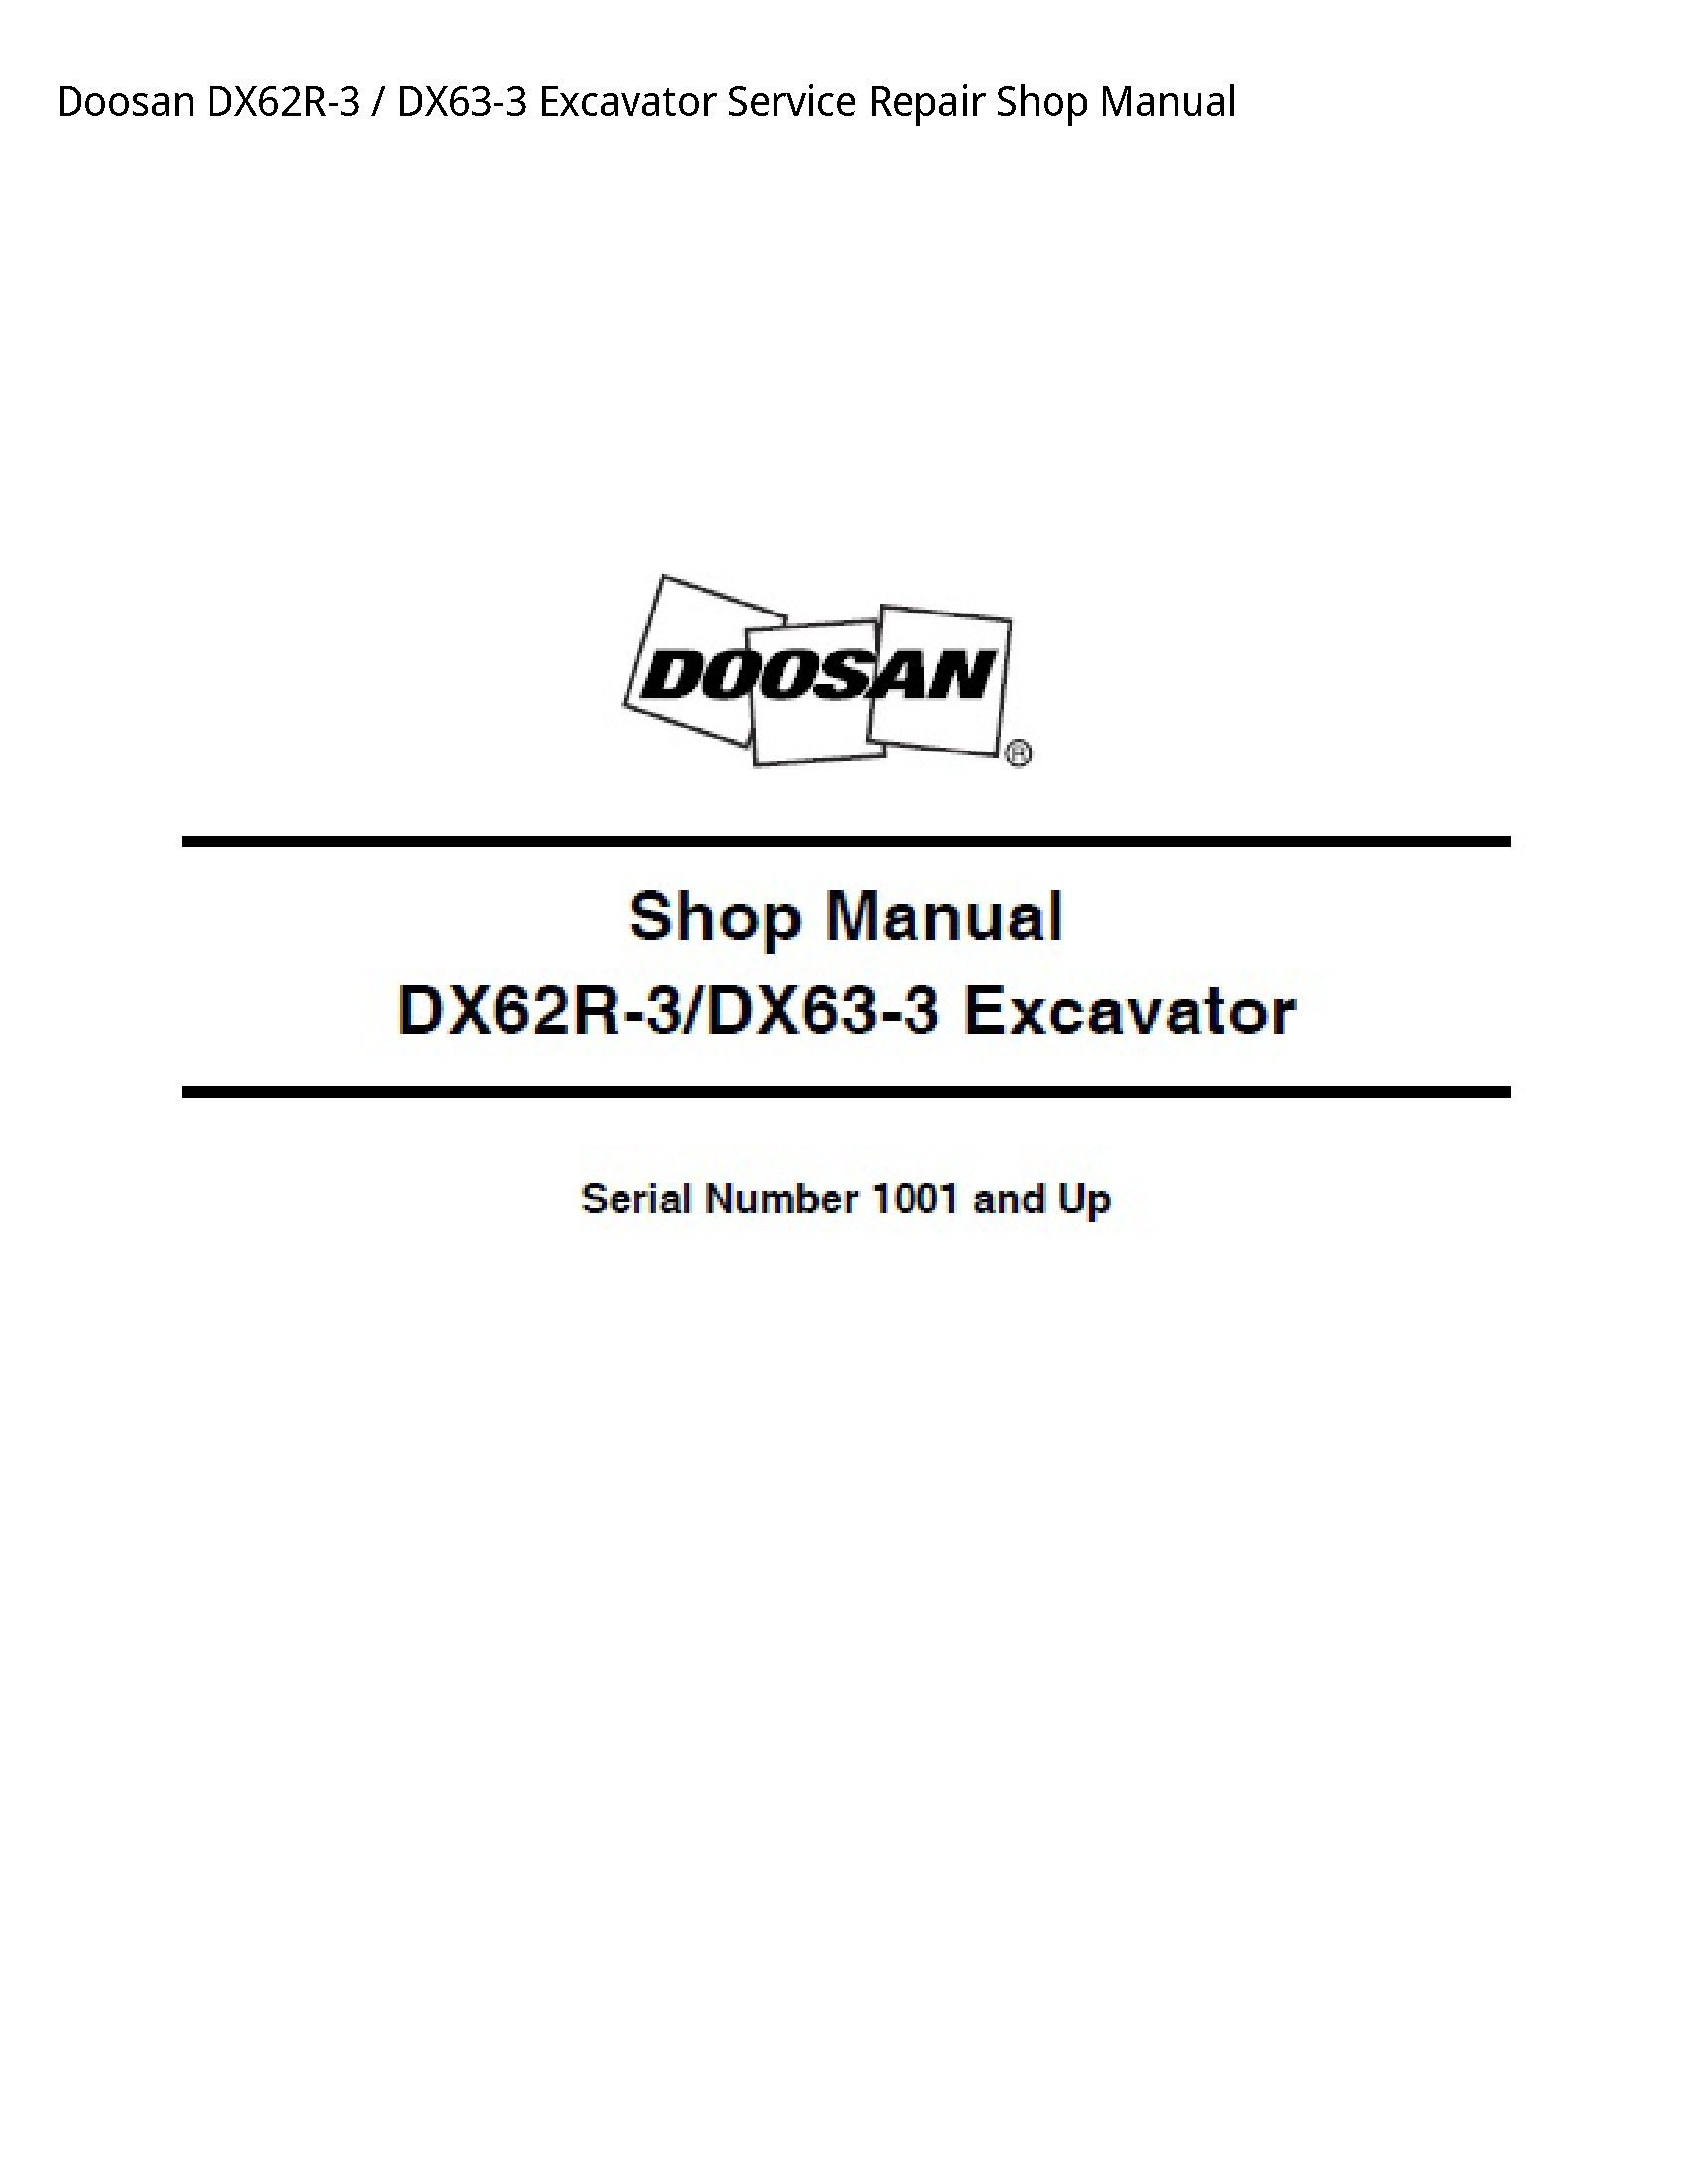 Doosan DX62R-3 Excavator manual